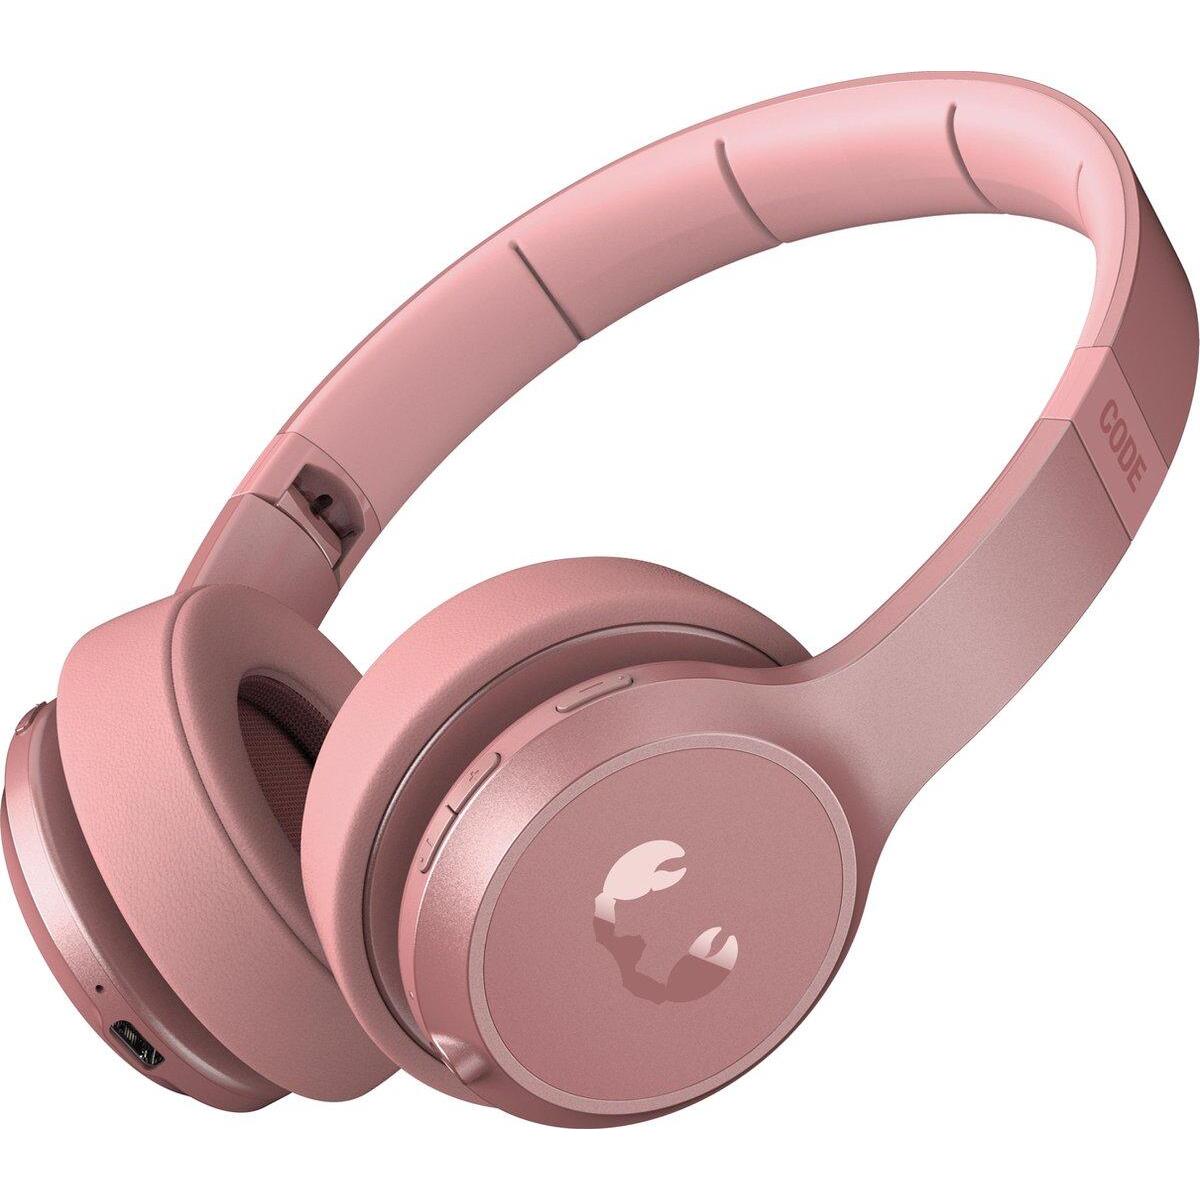 Bevestigen Bederven welvaart Fresh 'n Rebel Code ANC - Wireless Over-ear Koptelefoon - Roze (Dusty Pink)  - Bluetooth kopen - €50